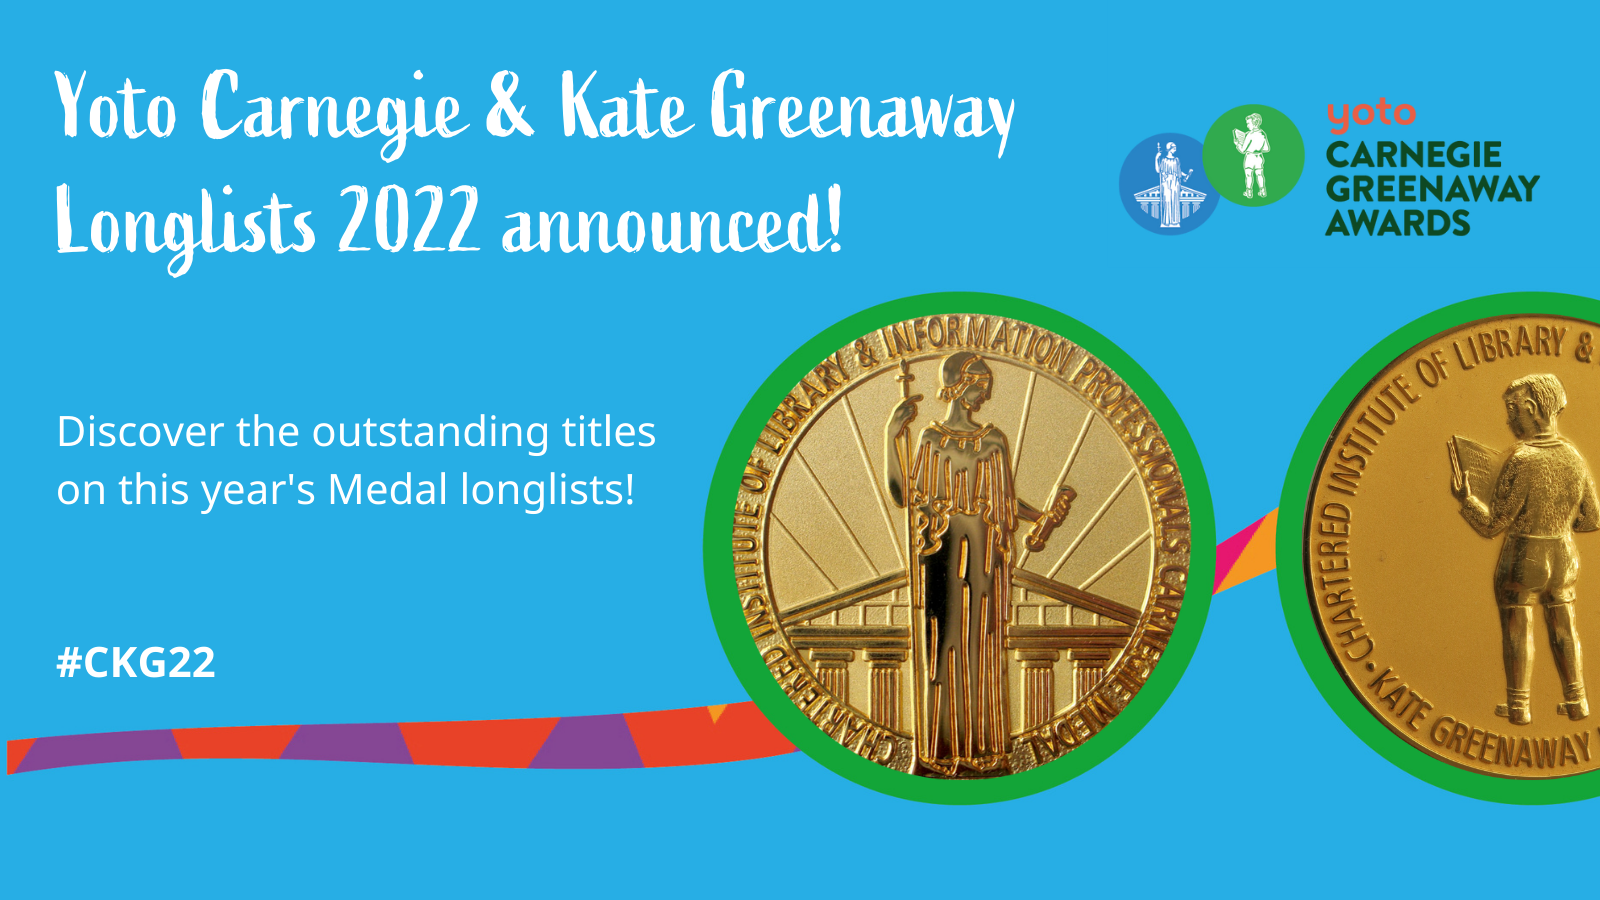 Danica Novgorodoff wins Kate Greenaway medal for graphic novel